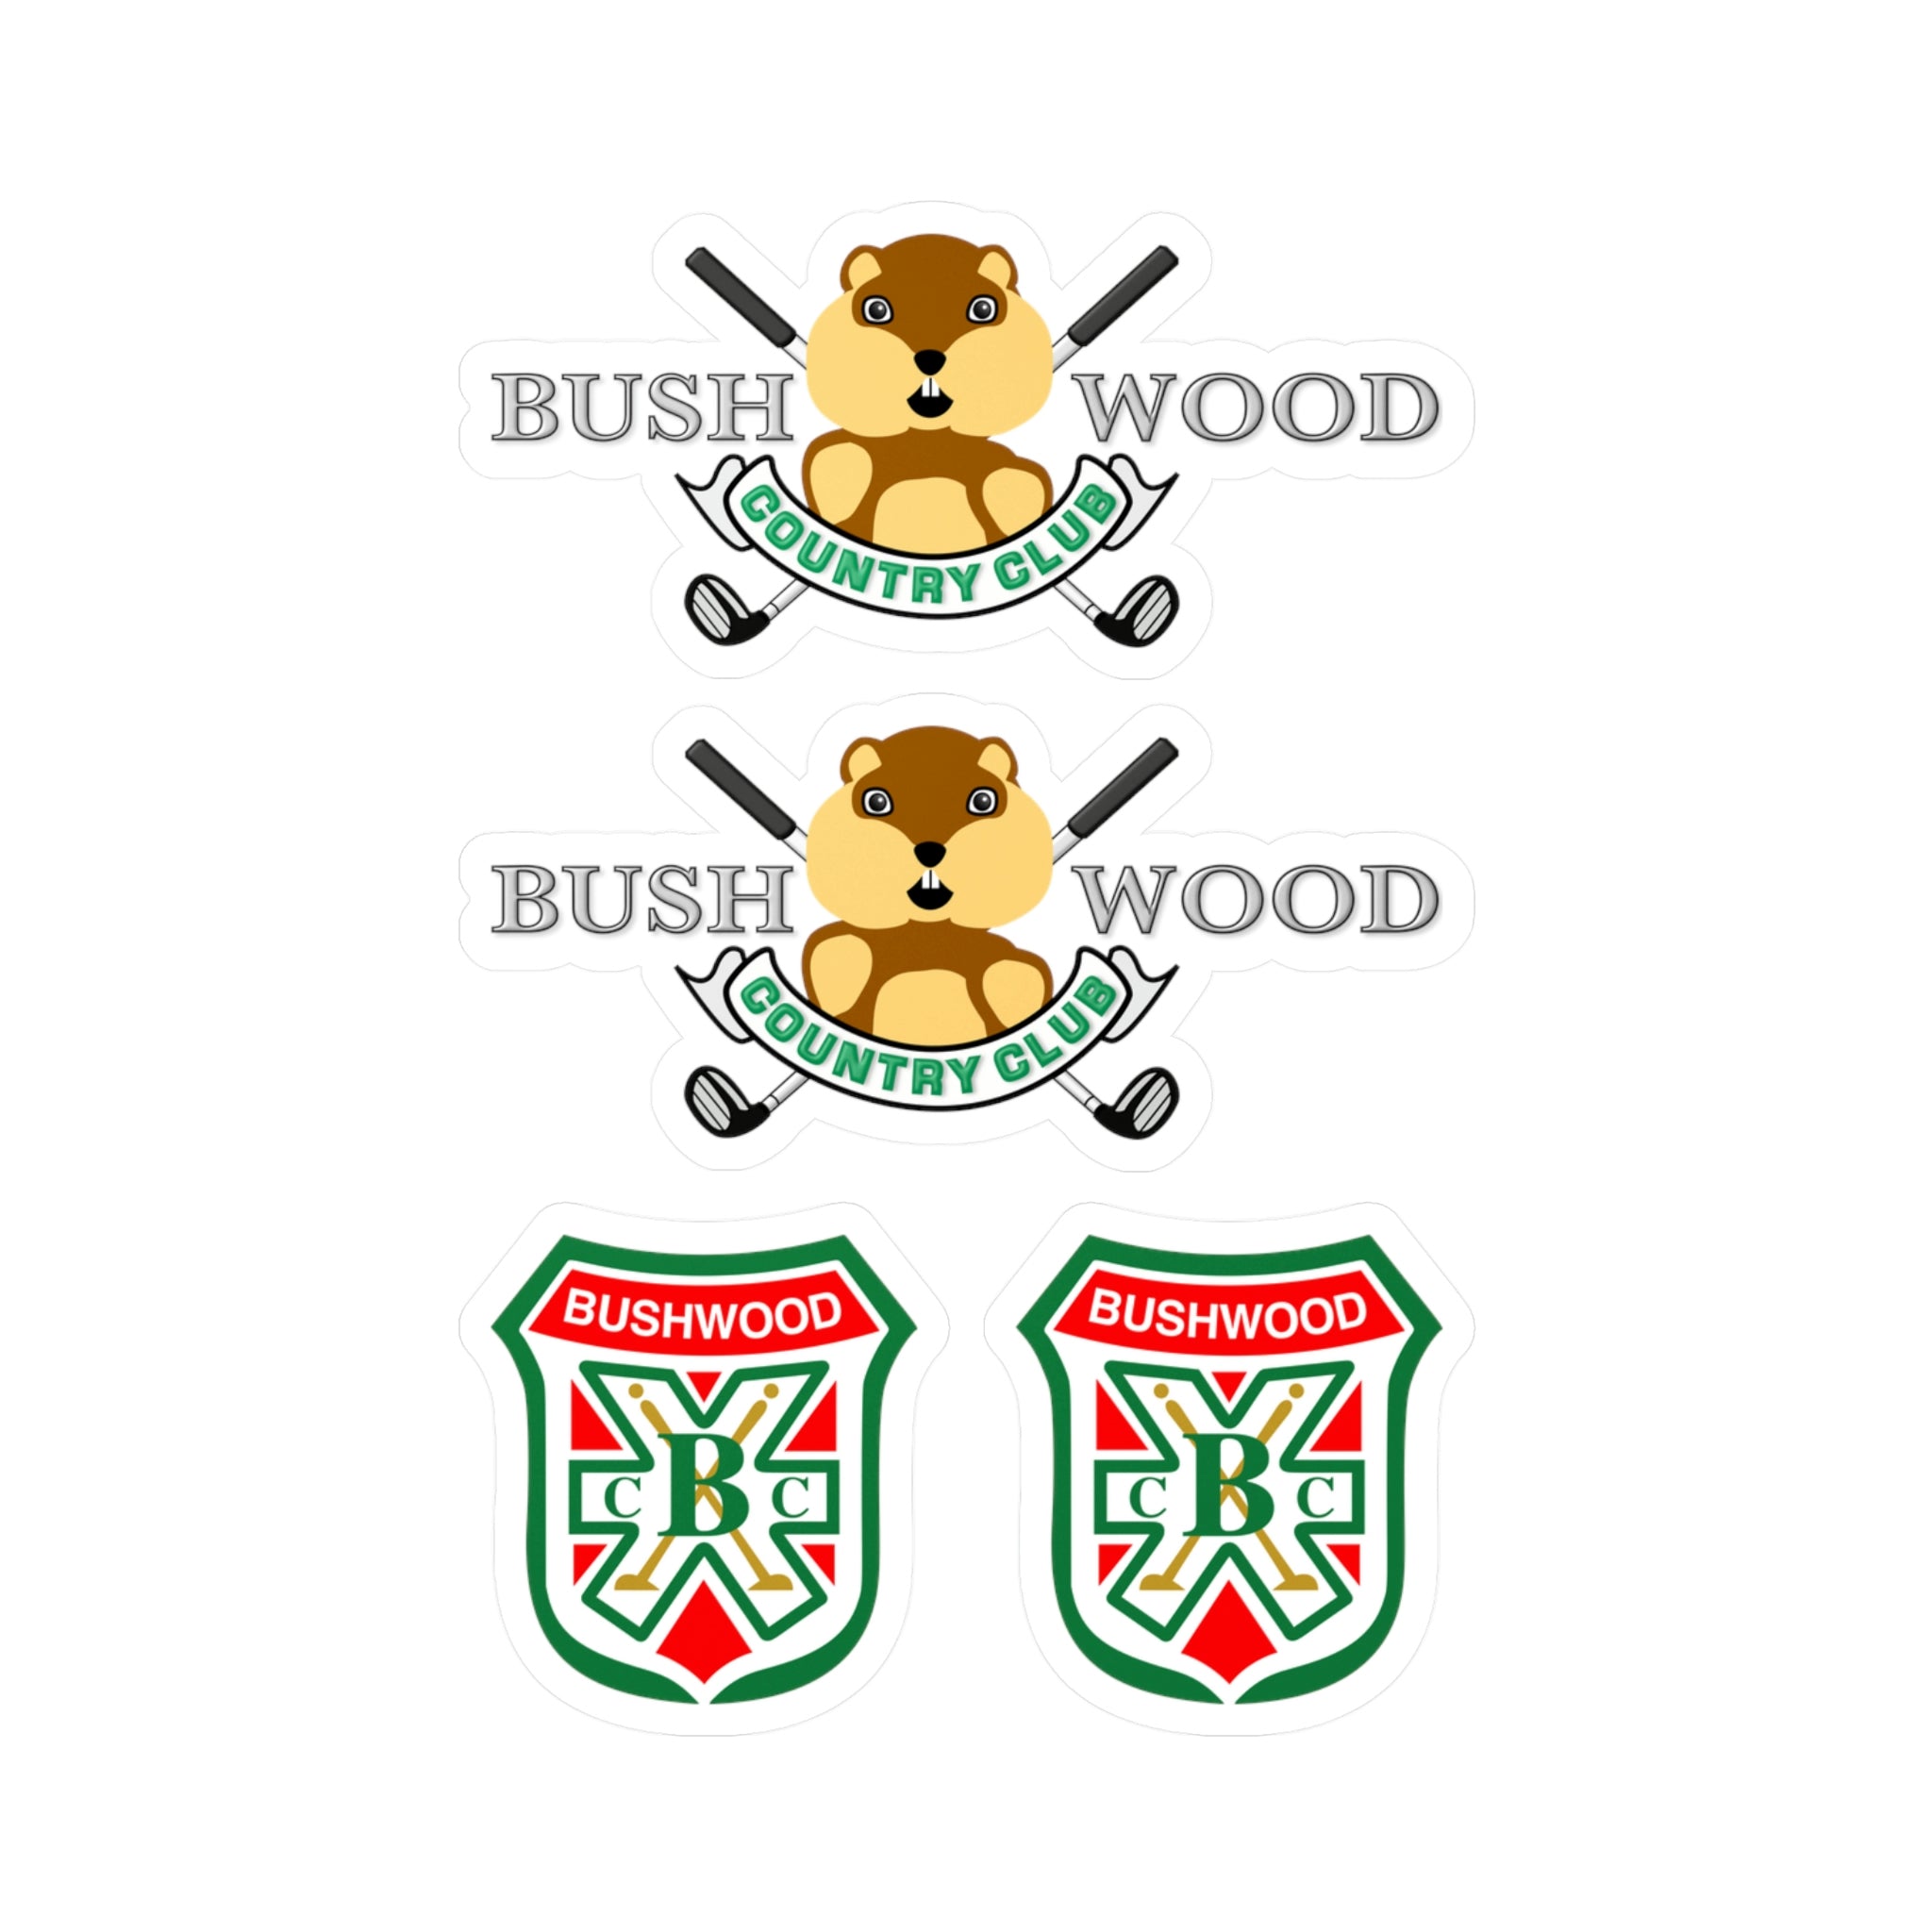 Bushwood Country Club Vinyl Decal Stickers Bush Wood